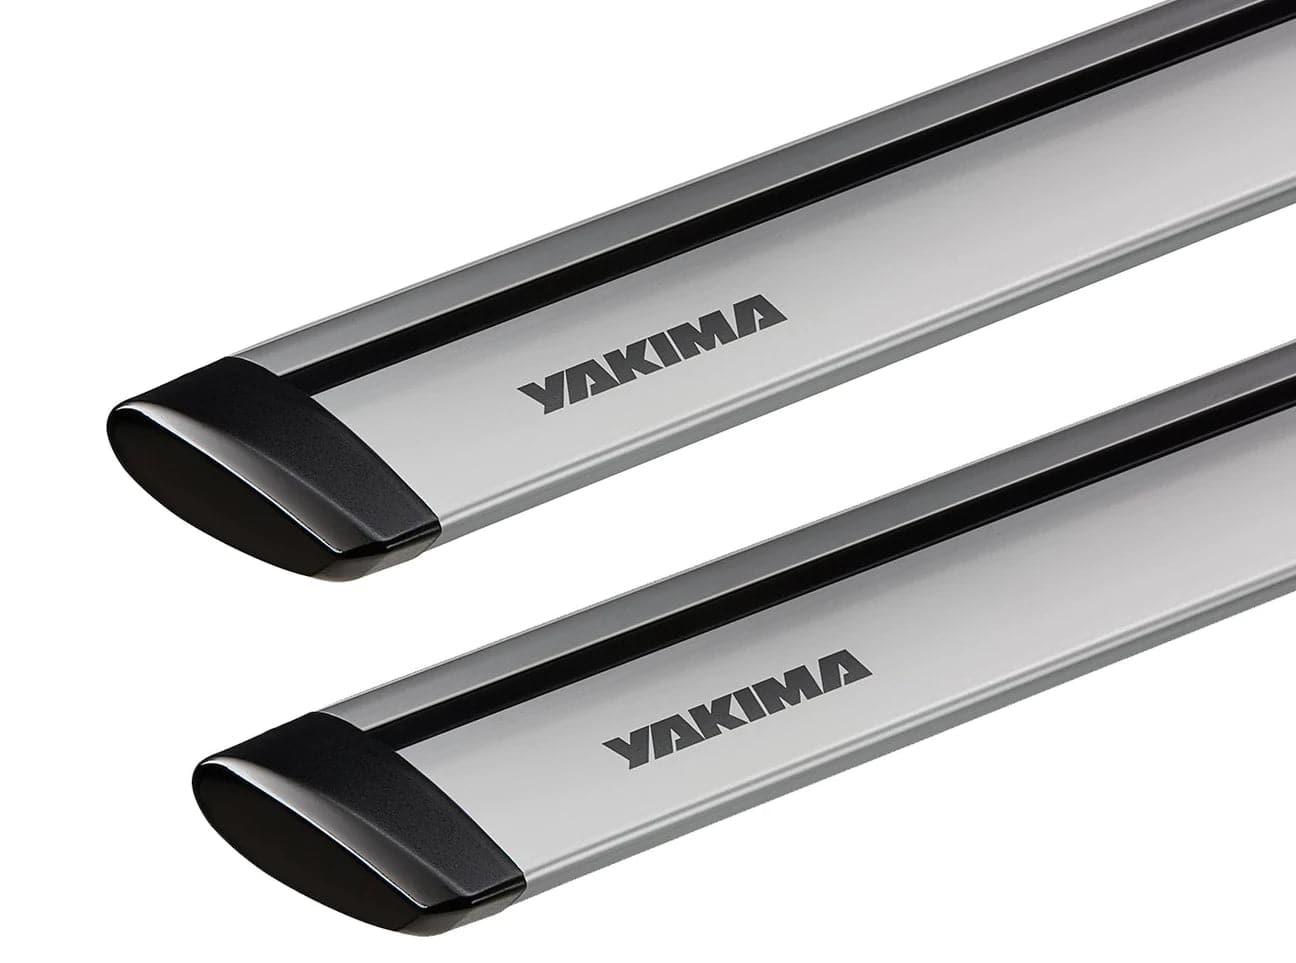 Two Yakima JetStream Crossbars on a white background.